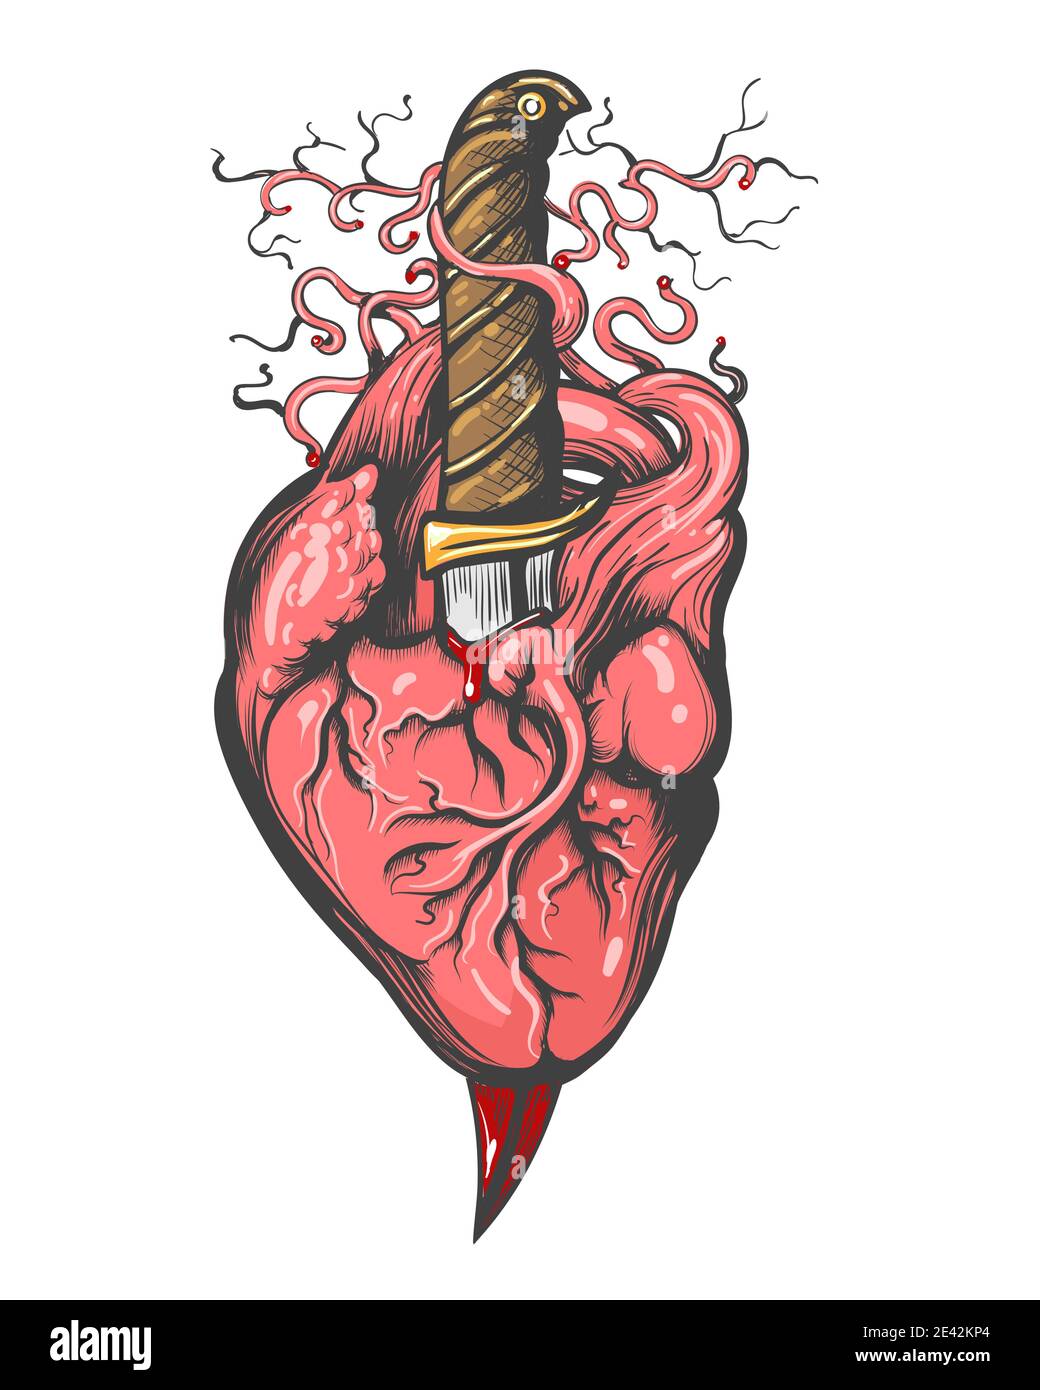 Dagger Heart Tattoo  back of the knee by joshing88 on DeviantArt